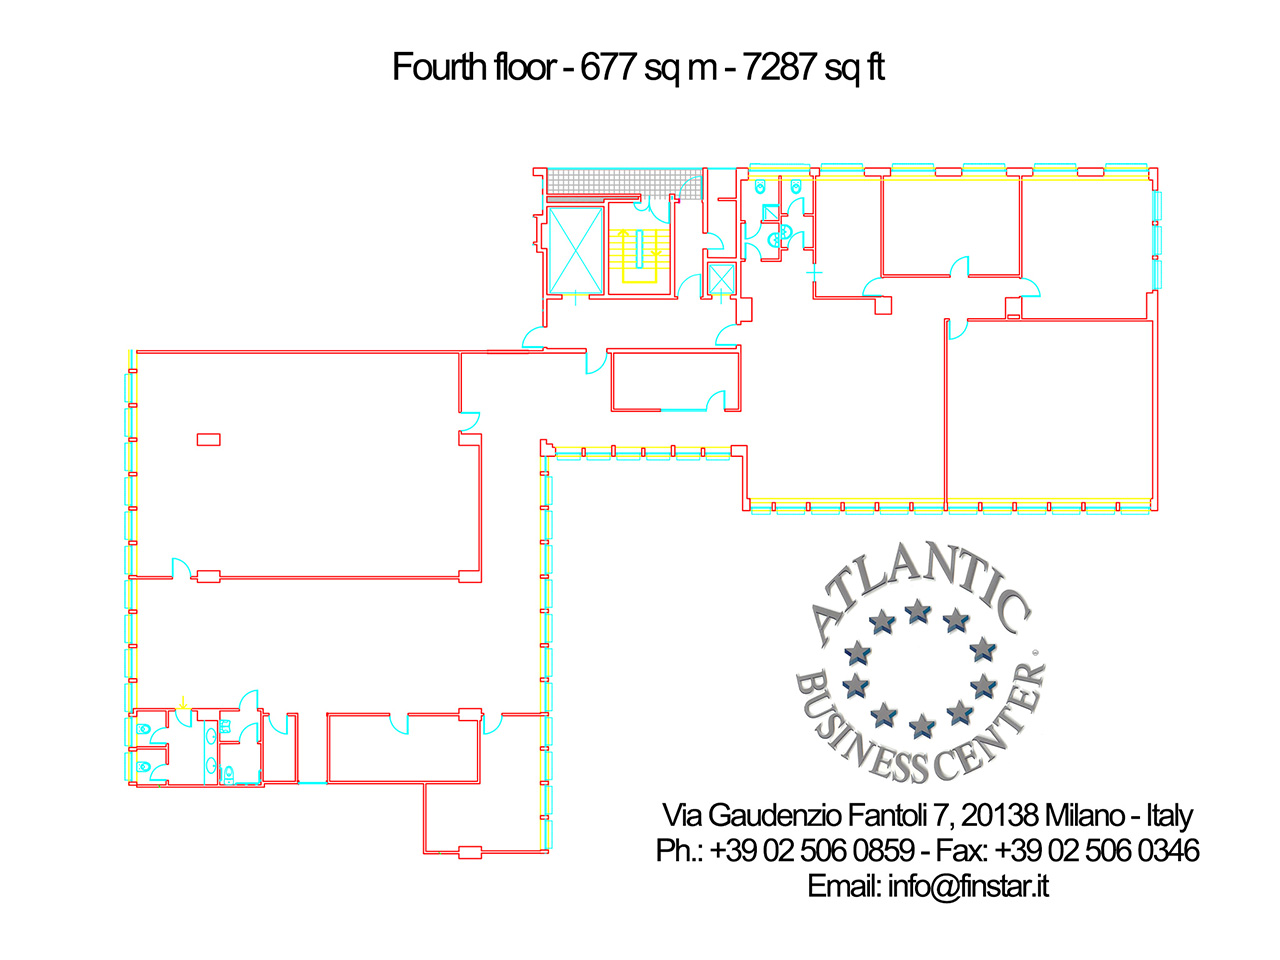 office 677 sq m (7287 sq ft) - Atlantic Business Center - fourth floor - floorplan